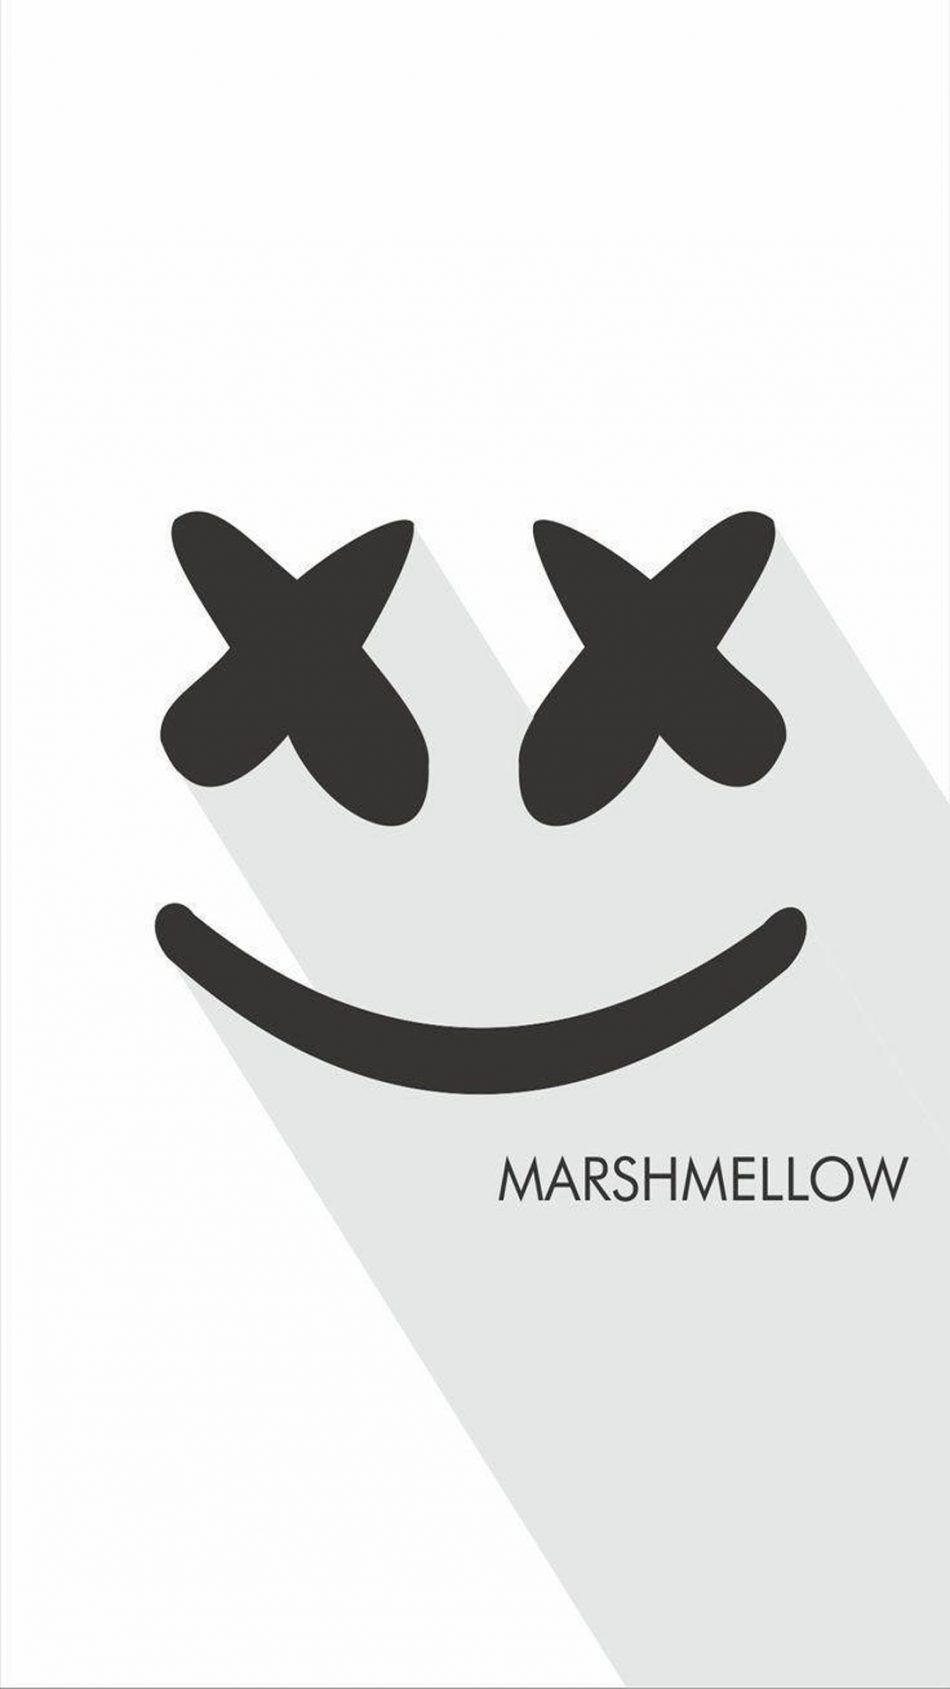 DJ Marshmello Logo Free 100% Pure HD Quality Mobile Wallpaper